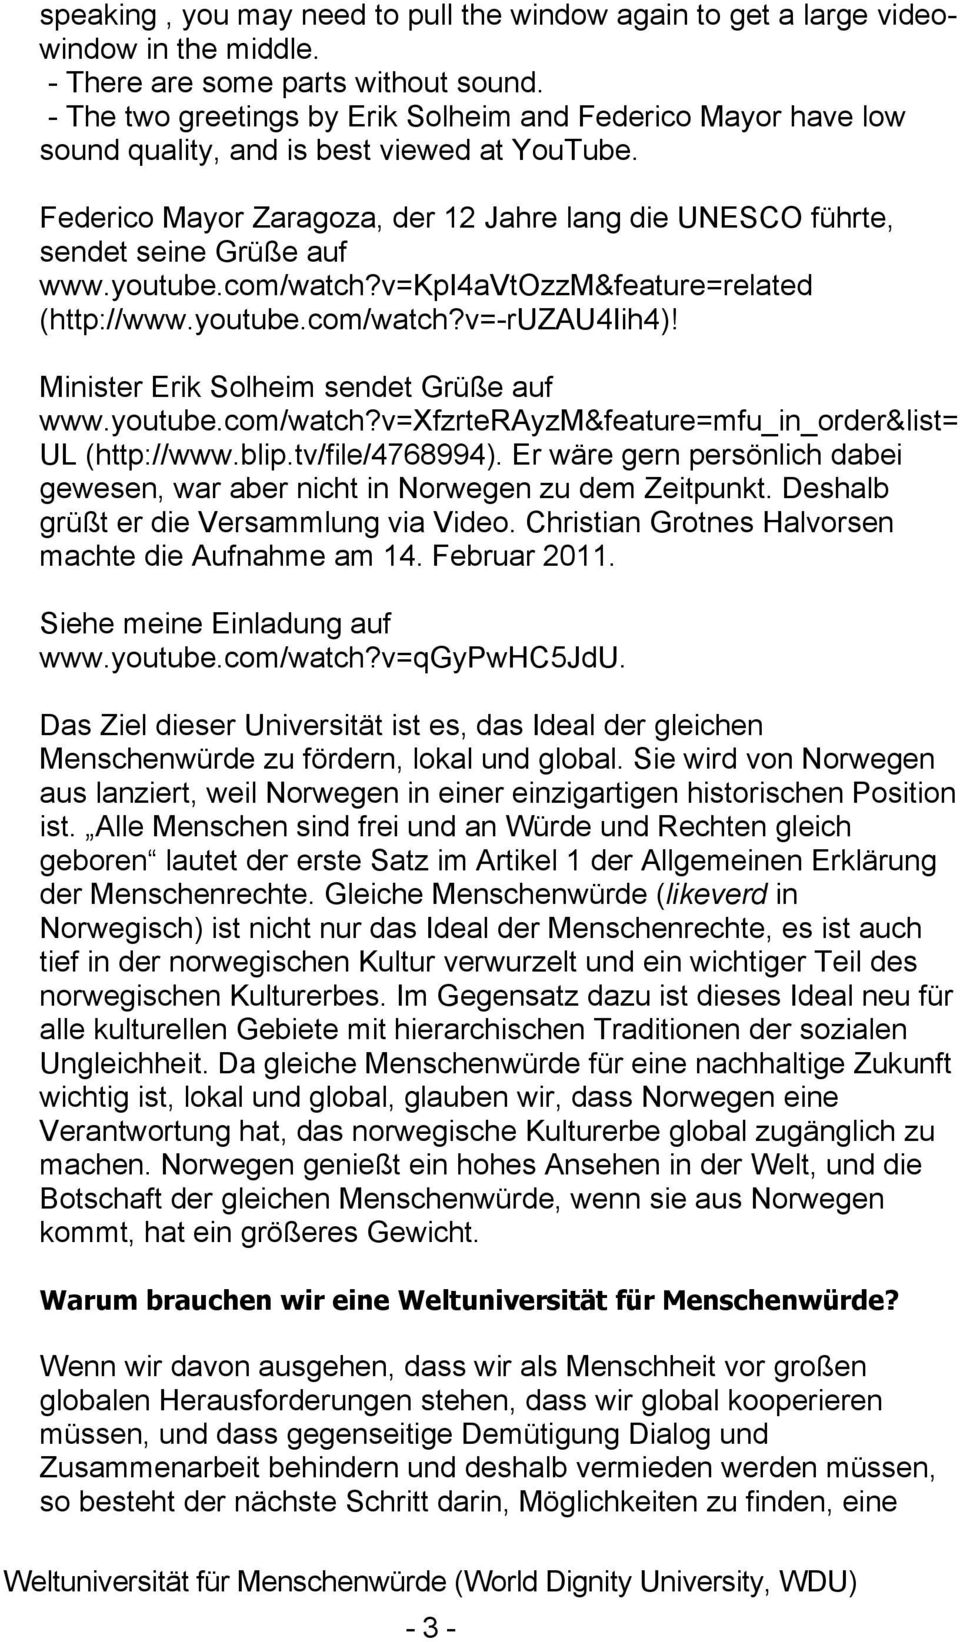 youtube.com/watch?v=kpi4avtozzm&feature=related (http://www.youtube.com/watch?v=-ruzau4iih4)! Minister Erik Solheim sendet Grüße auf www.youtube.com/watch?v=xfzrterayzm&feature=mfu_in_order&list= UL (http://www.